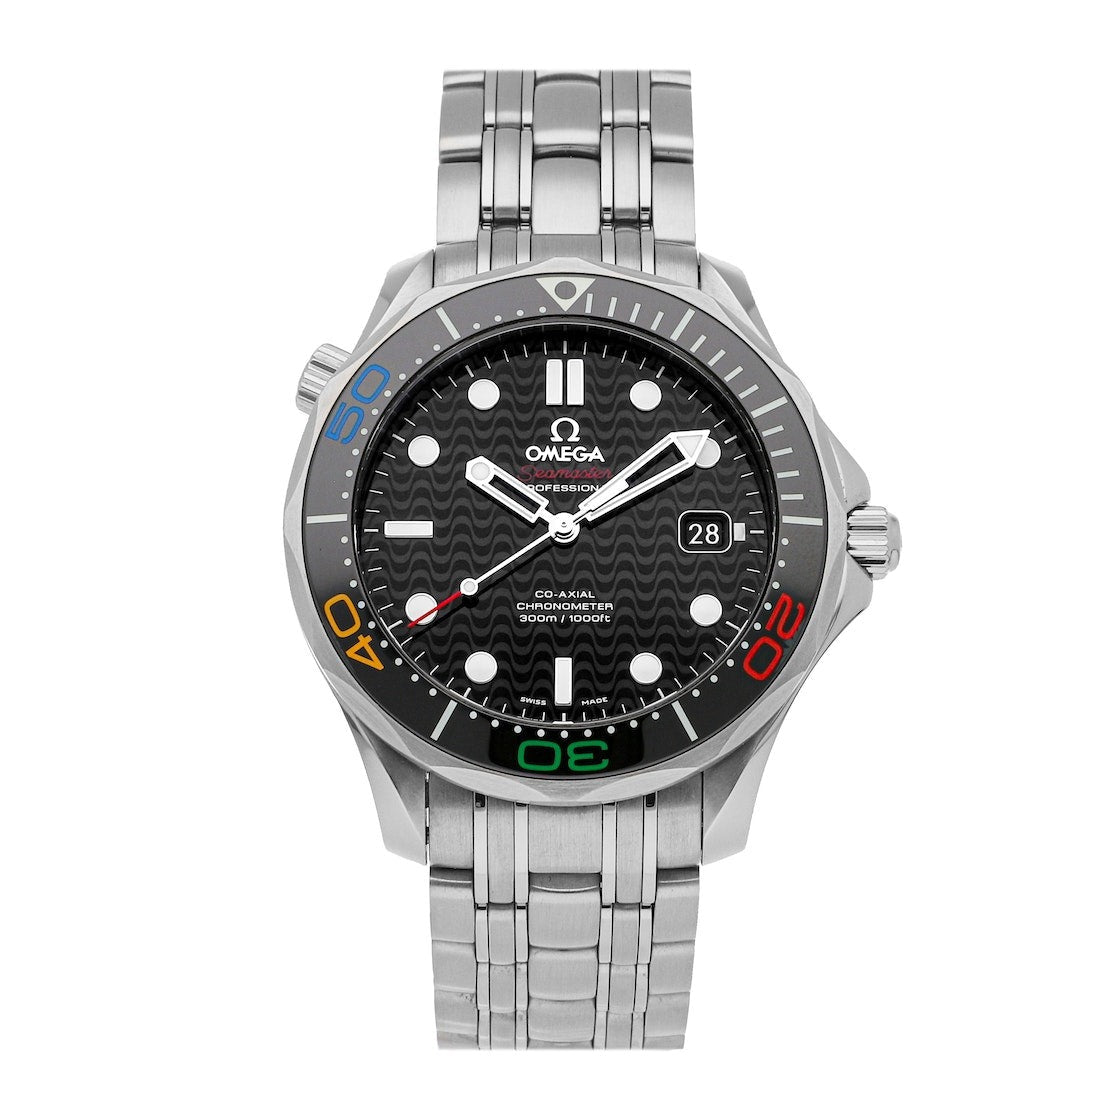 Omega Seamaster Rio 2016 Limited edition Luxury Watch | Harley's Time LLC